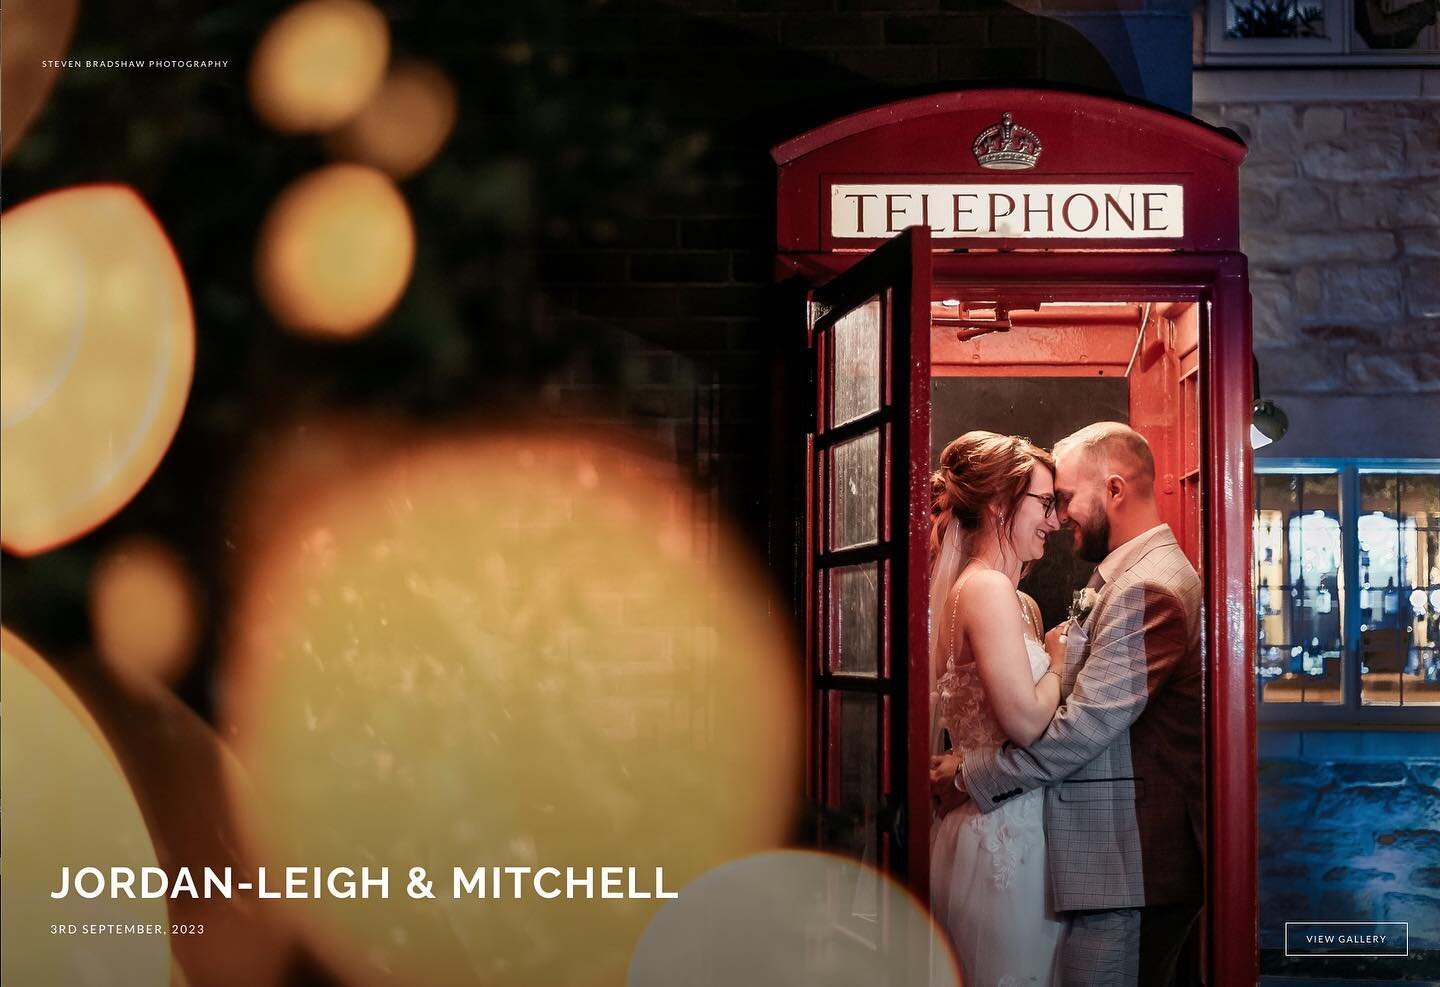 Jordan-Leigh &amp; Mitchell your wedding photos are ready!! 😍 @jordan_leigh16 @thewhitehartmoorwoodmoor